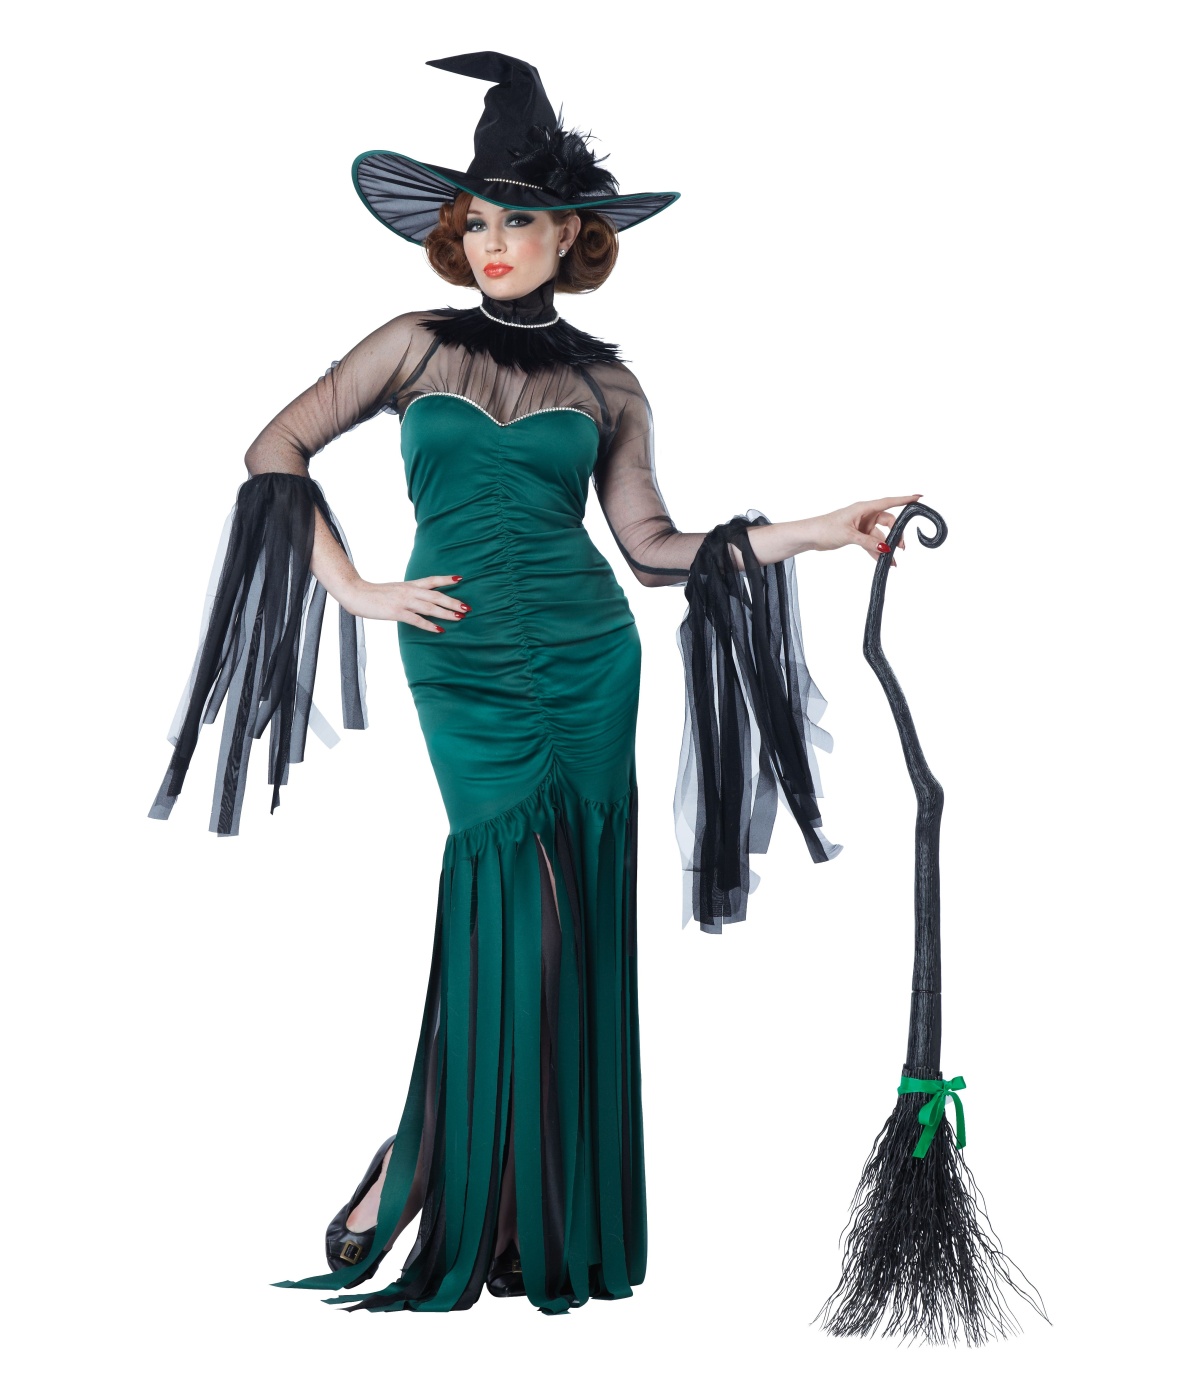 The Magical Grand Sorceress Women Costume